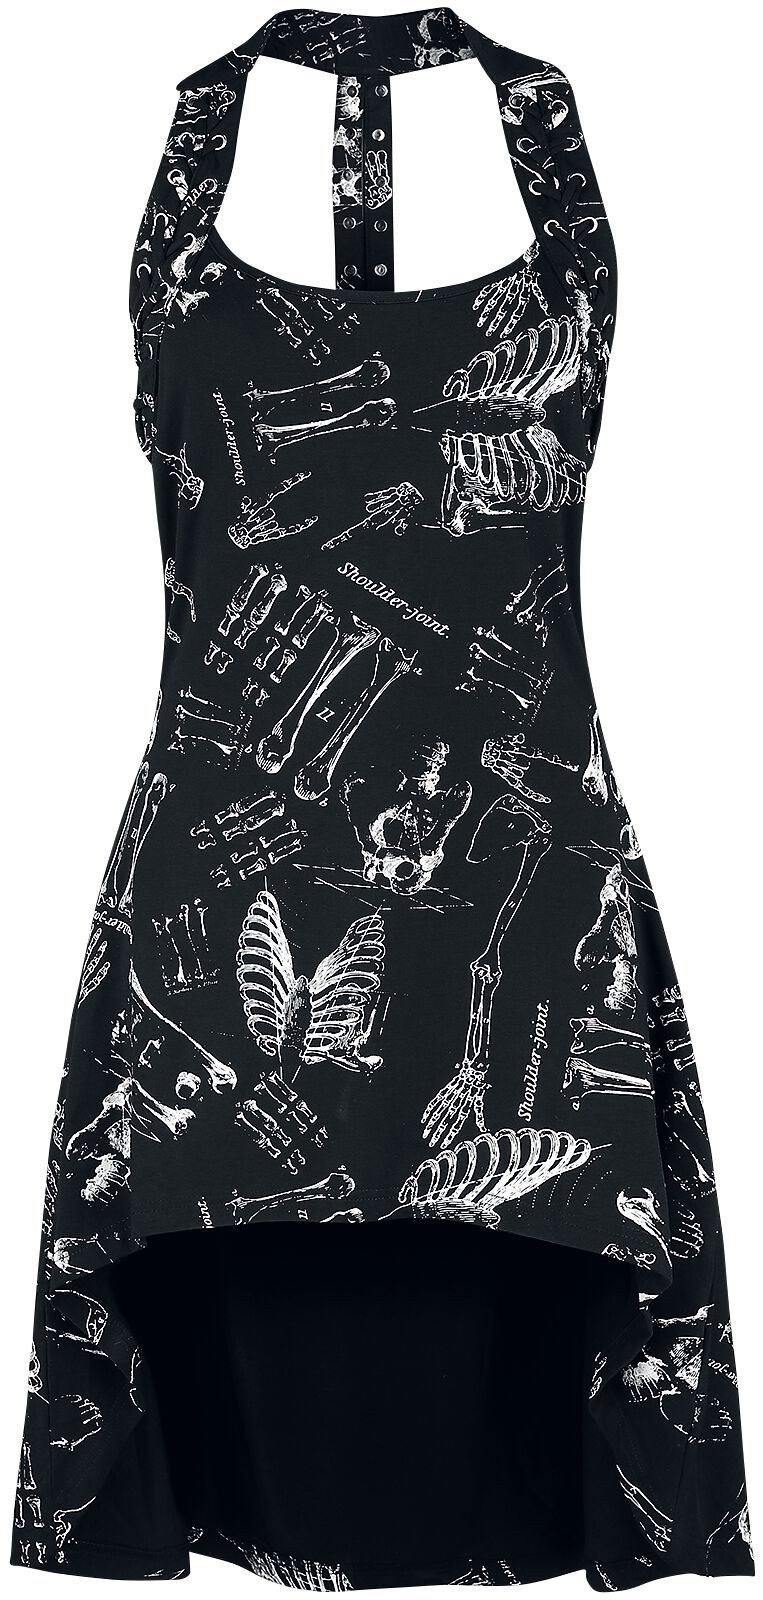 Robe courte Gothic de Vixxsin - Robe Anatomy Bone - S à XL - pour Femme - noir/blanc